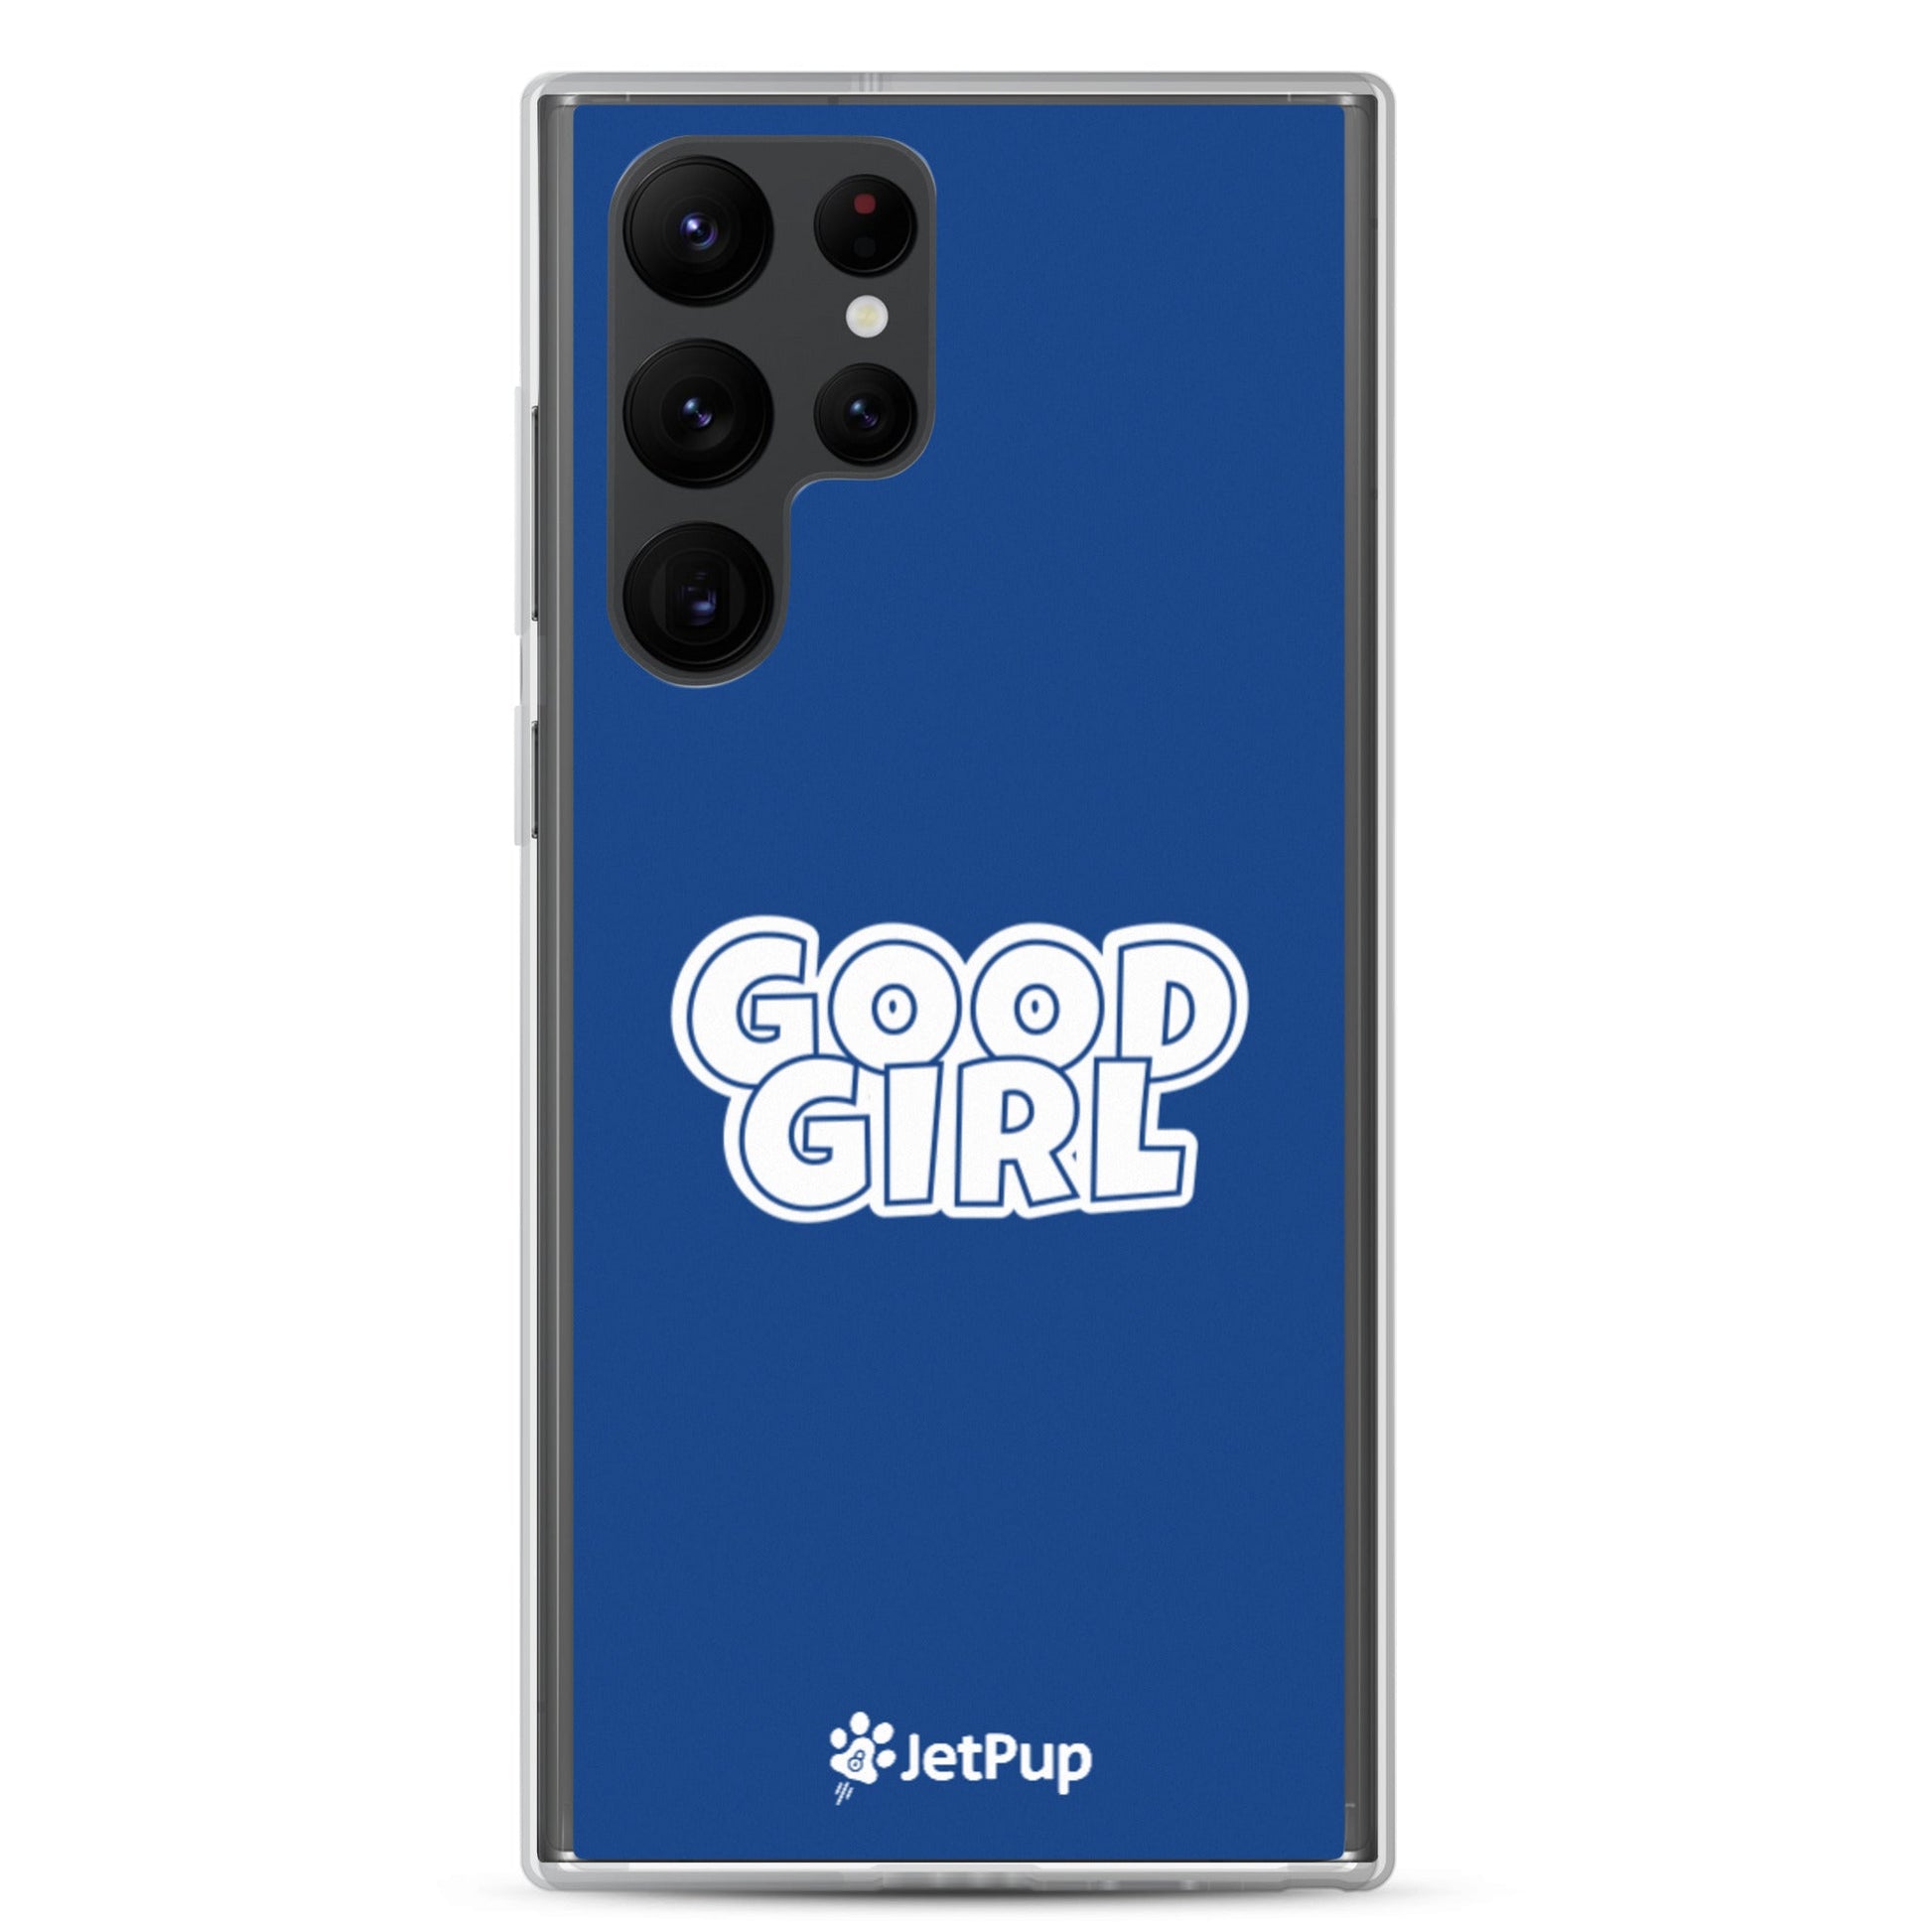 Good Girl Samsung Case - Blue - JetPup